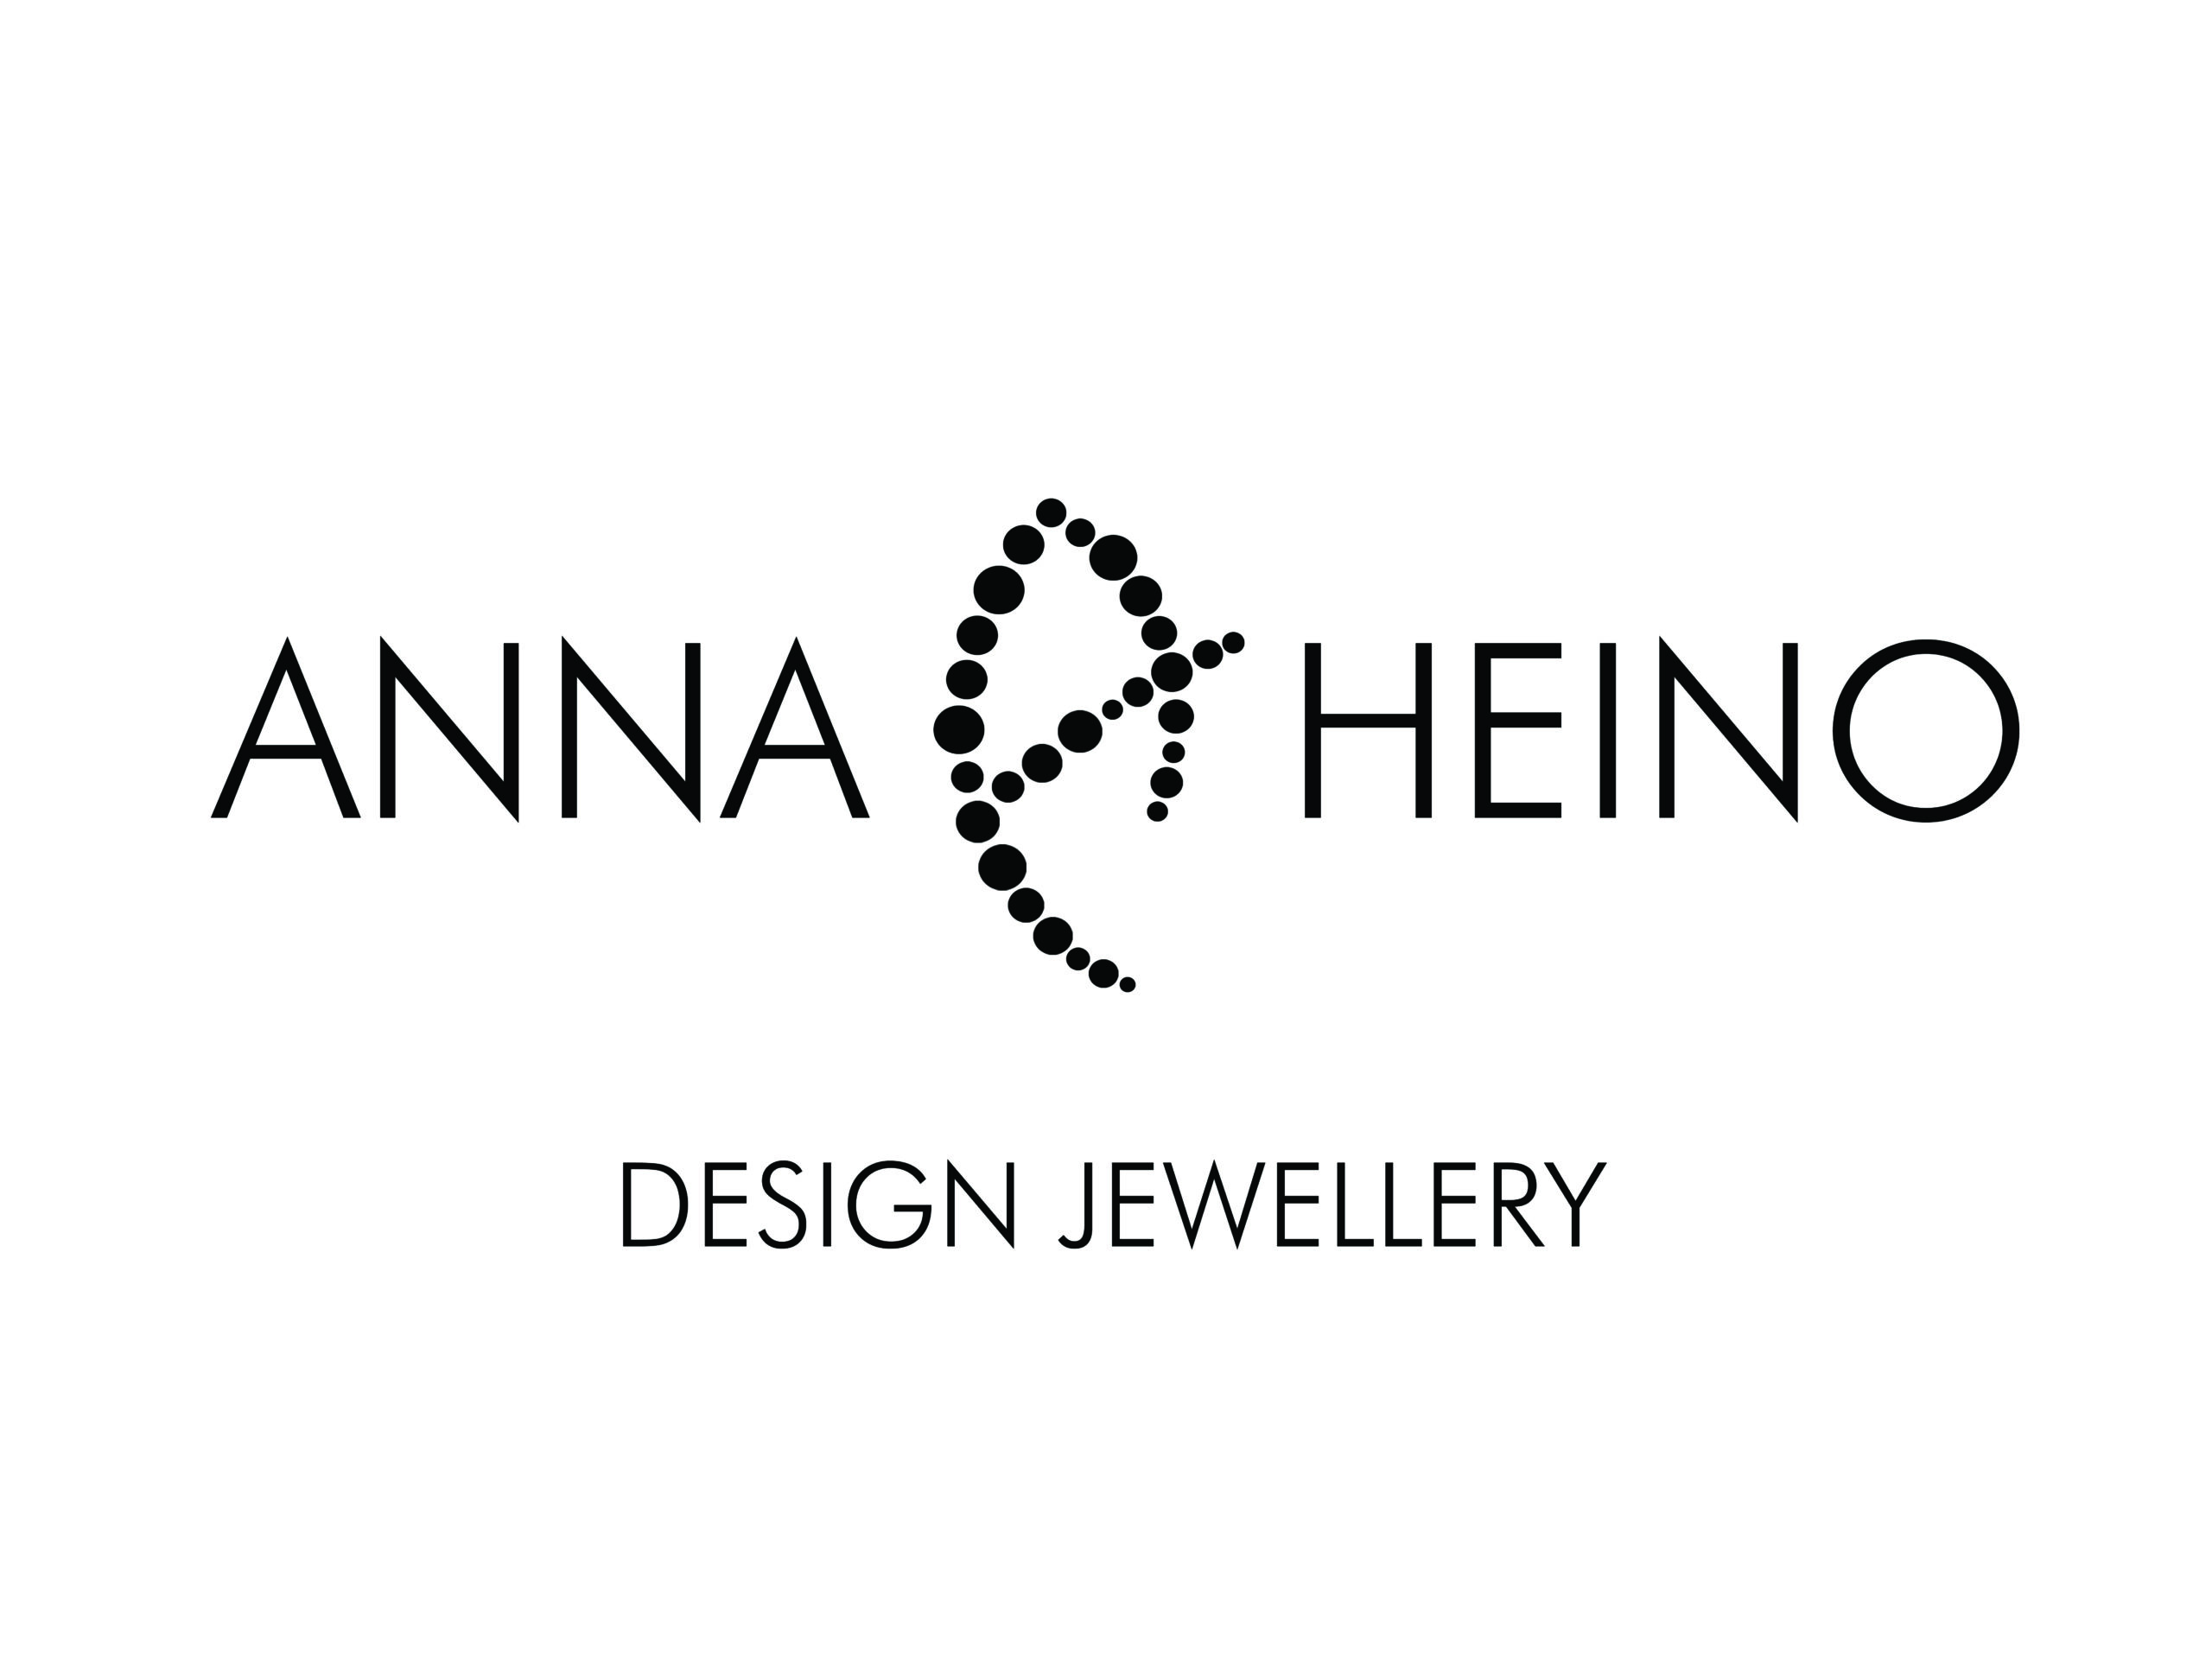 Anna Heino – Design Jewellery